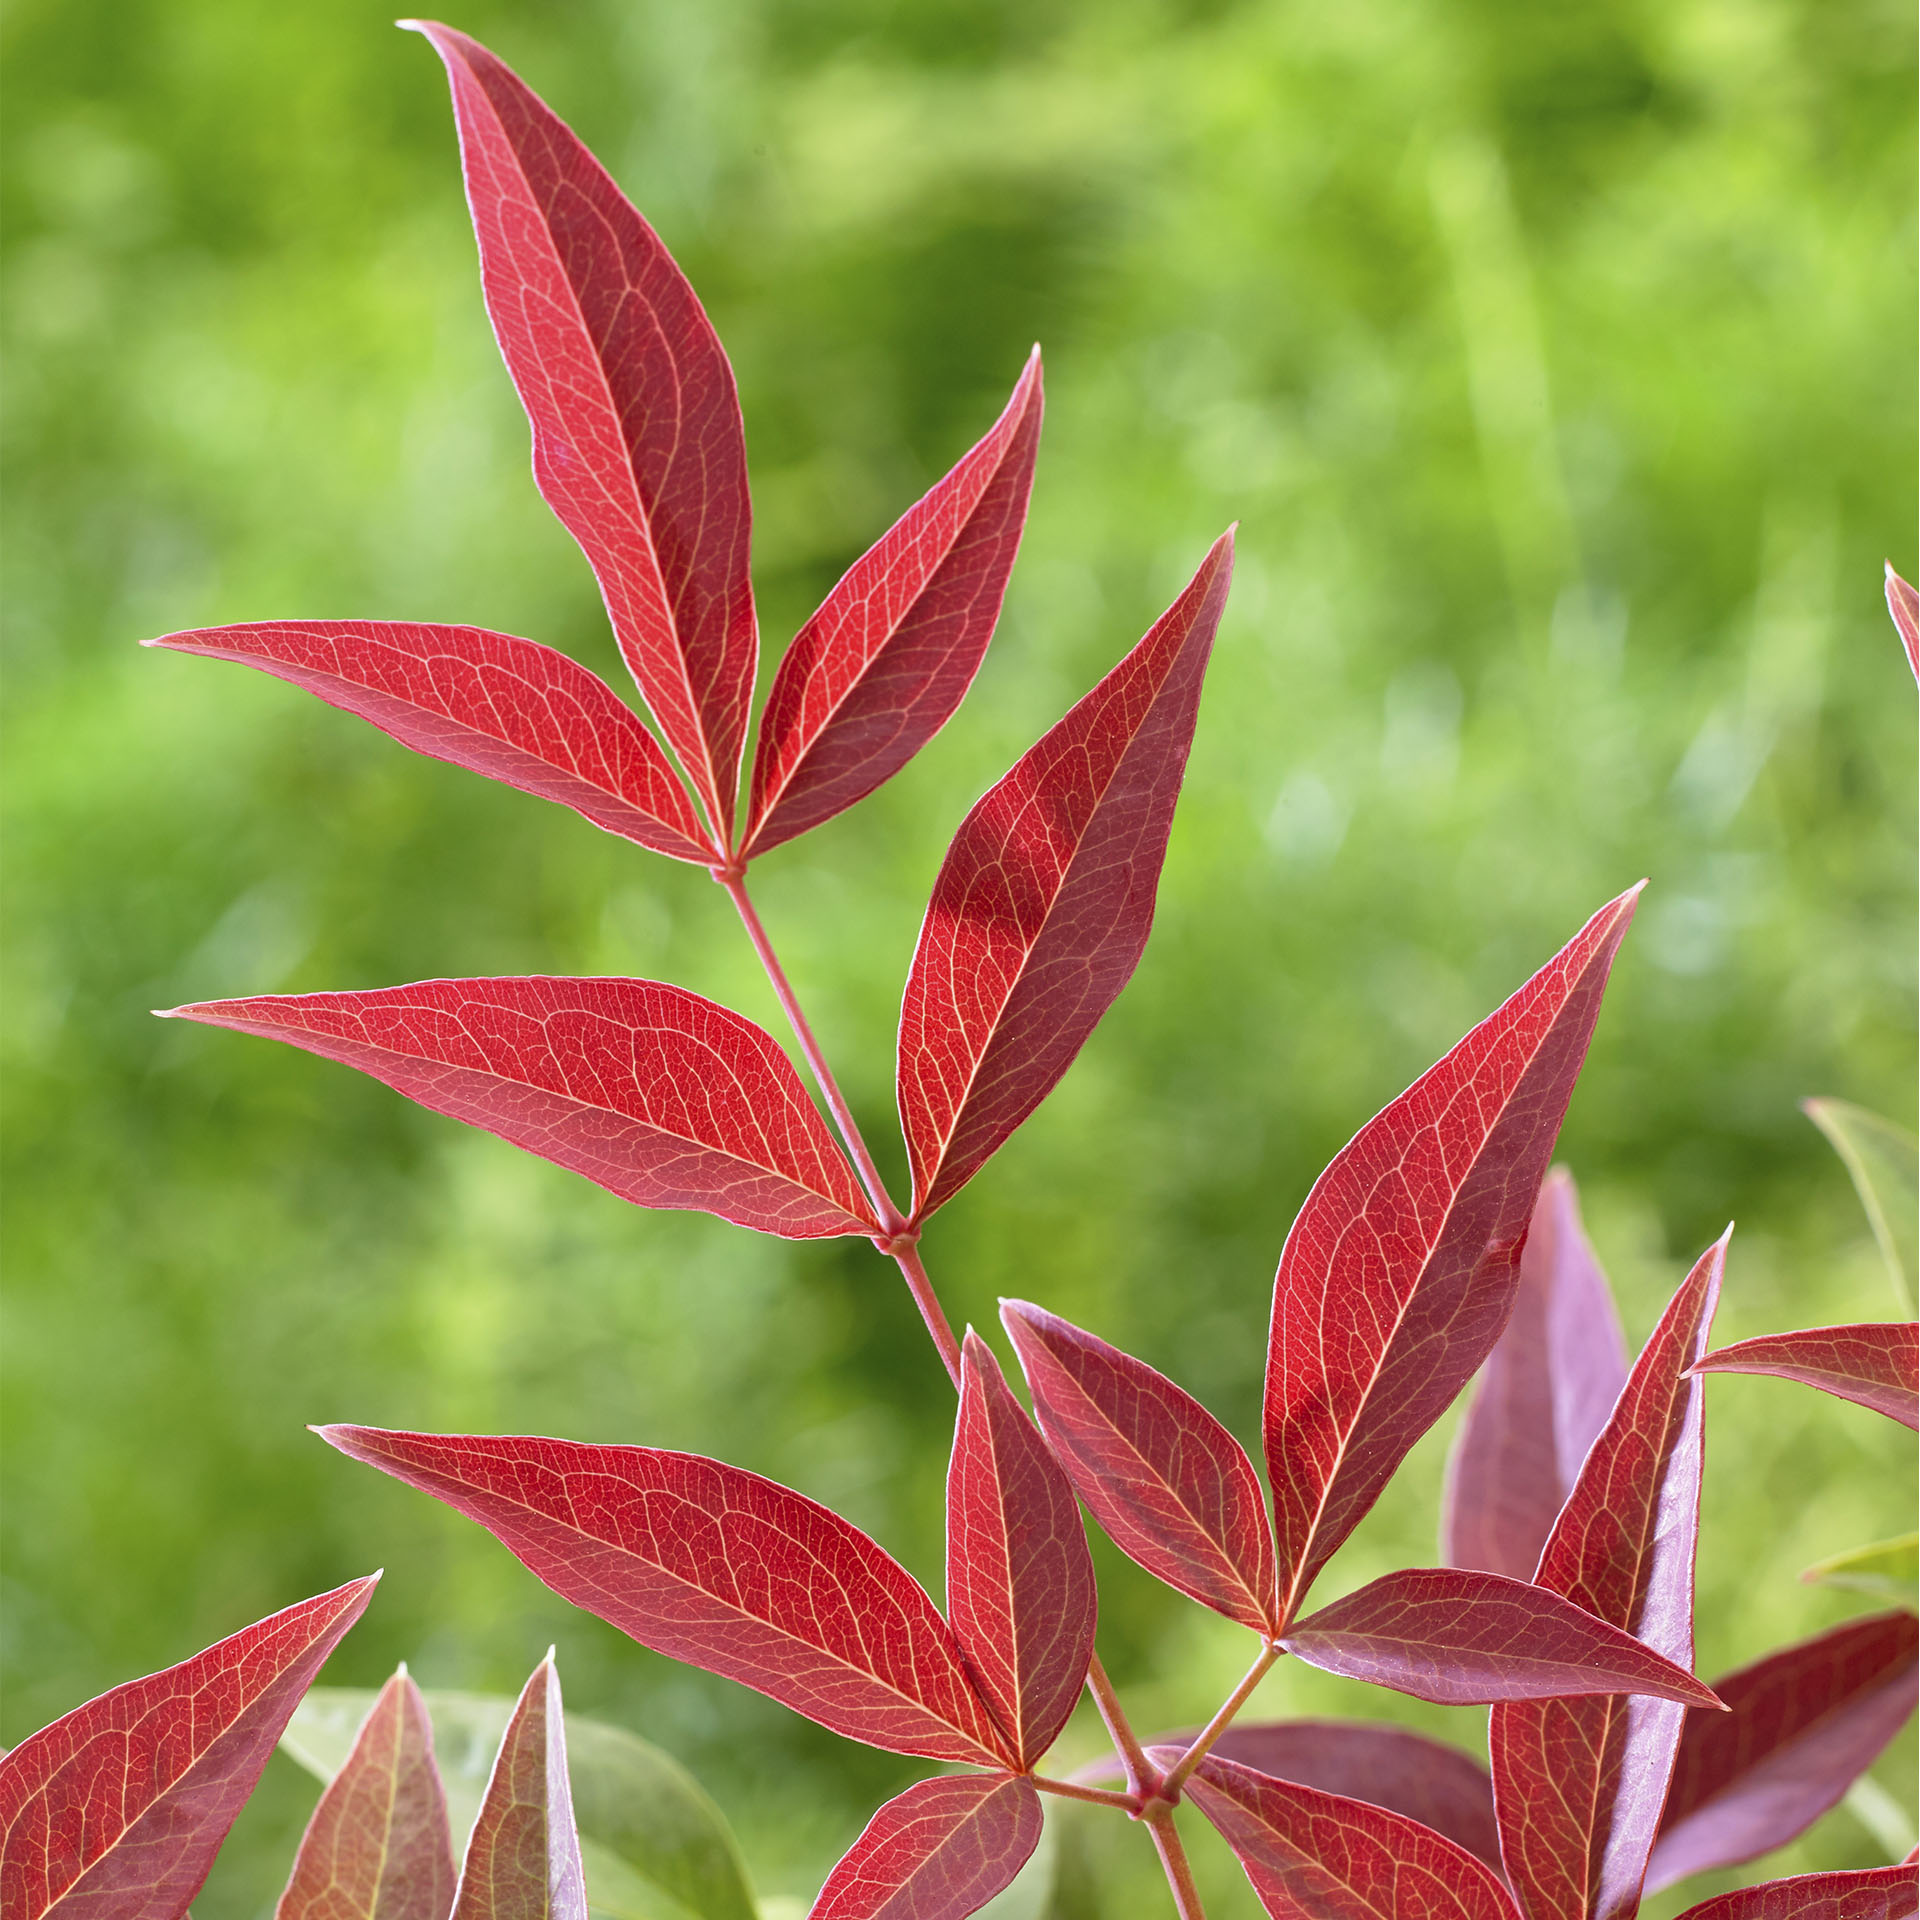 leuchtend rote Blätter als Herbstfärbung des Himmelsbambus Obsessed